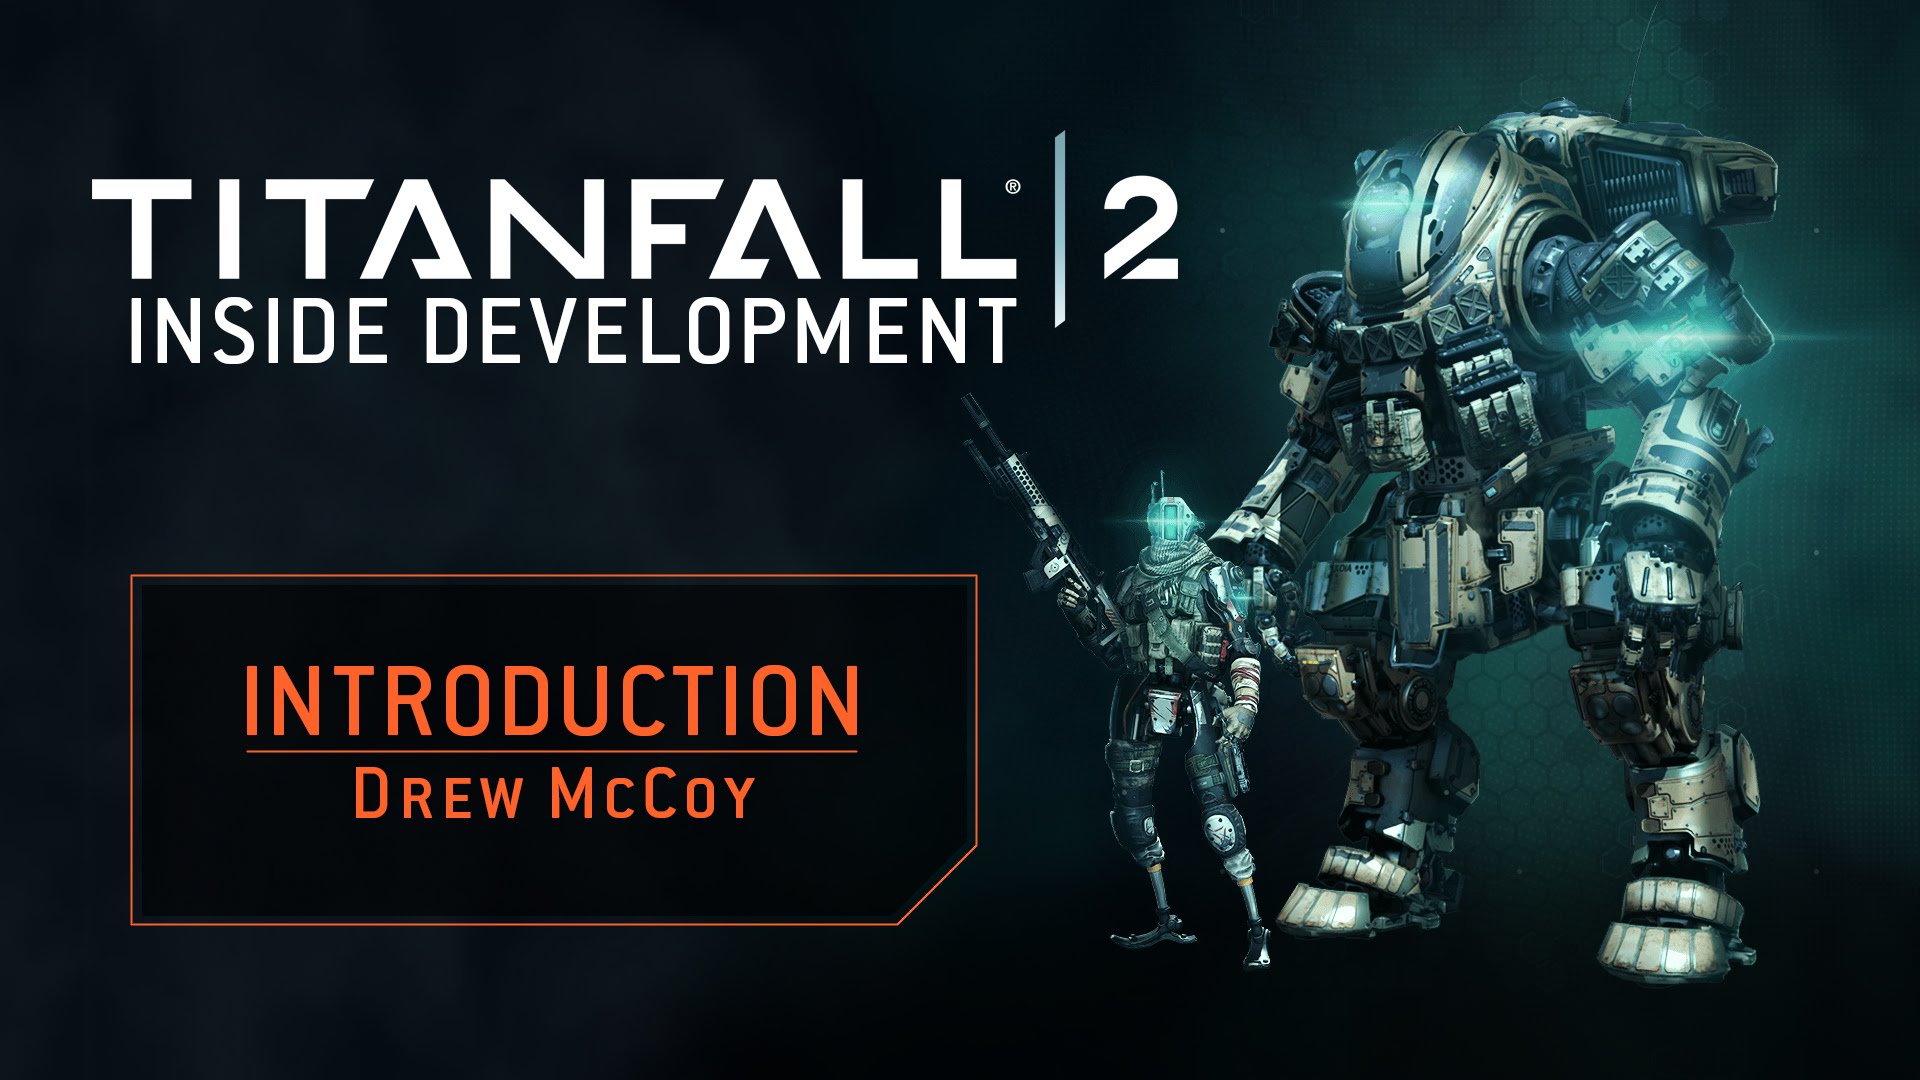 Titanfall 2 – Inside Development: Intro